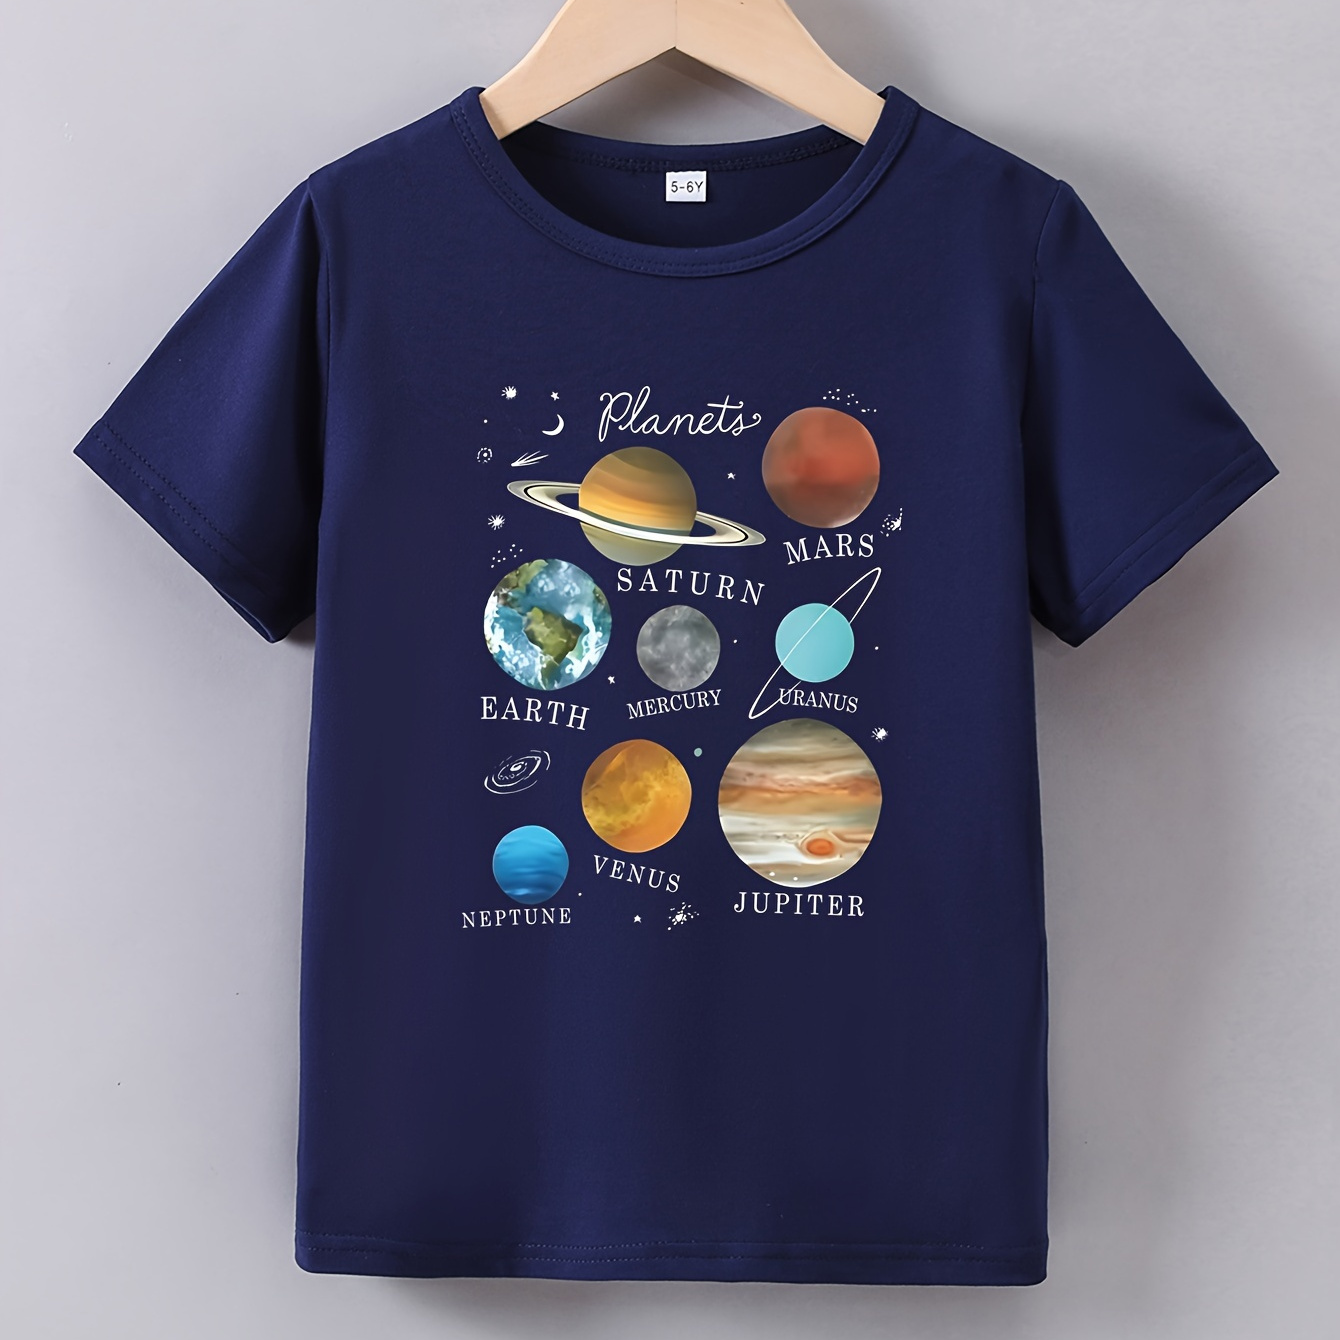 

Boys Summer Short Sleeve T-shirt, Cartoon Planet Letter Print, Casual Style